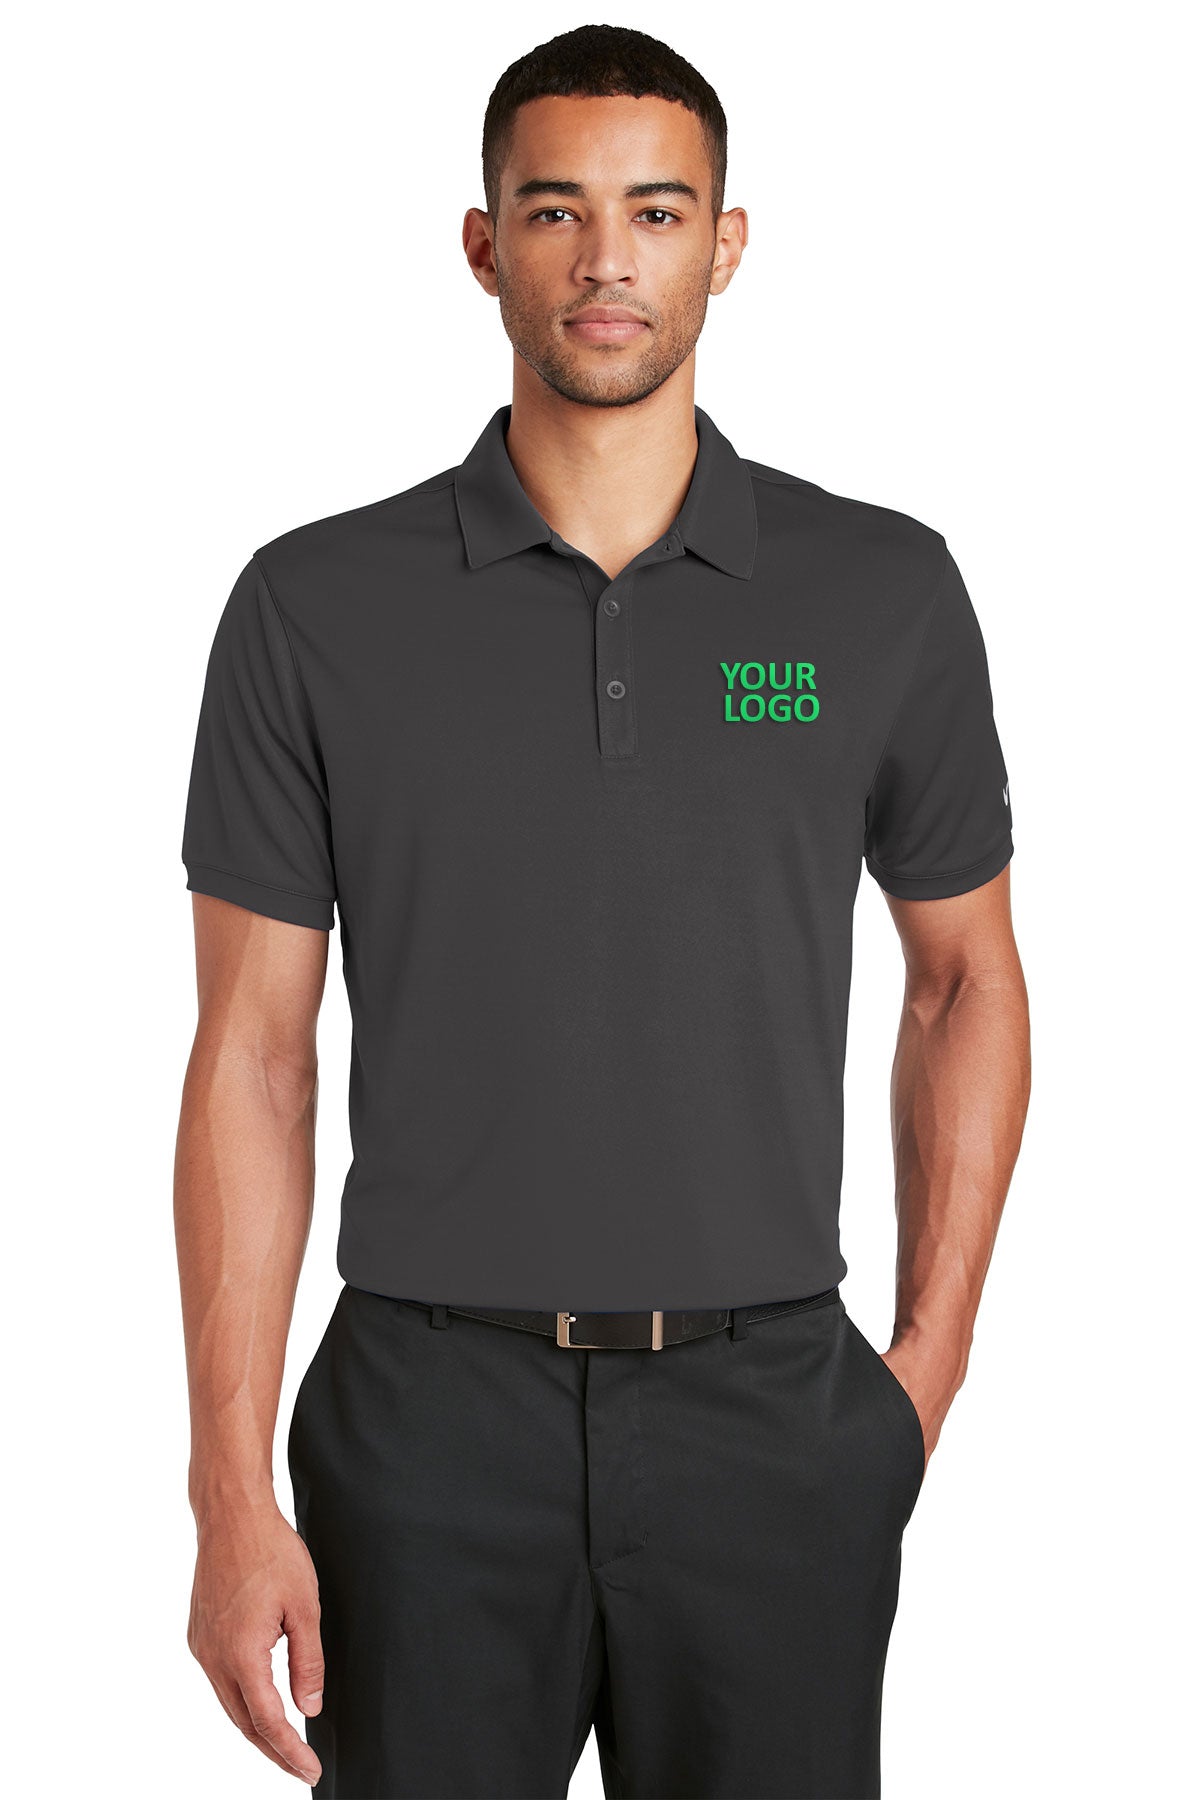 nike anthracite 799802 quality polo shirts with company logo